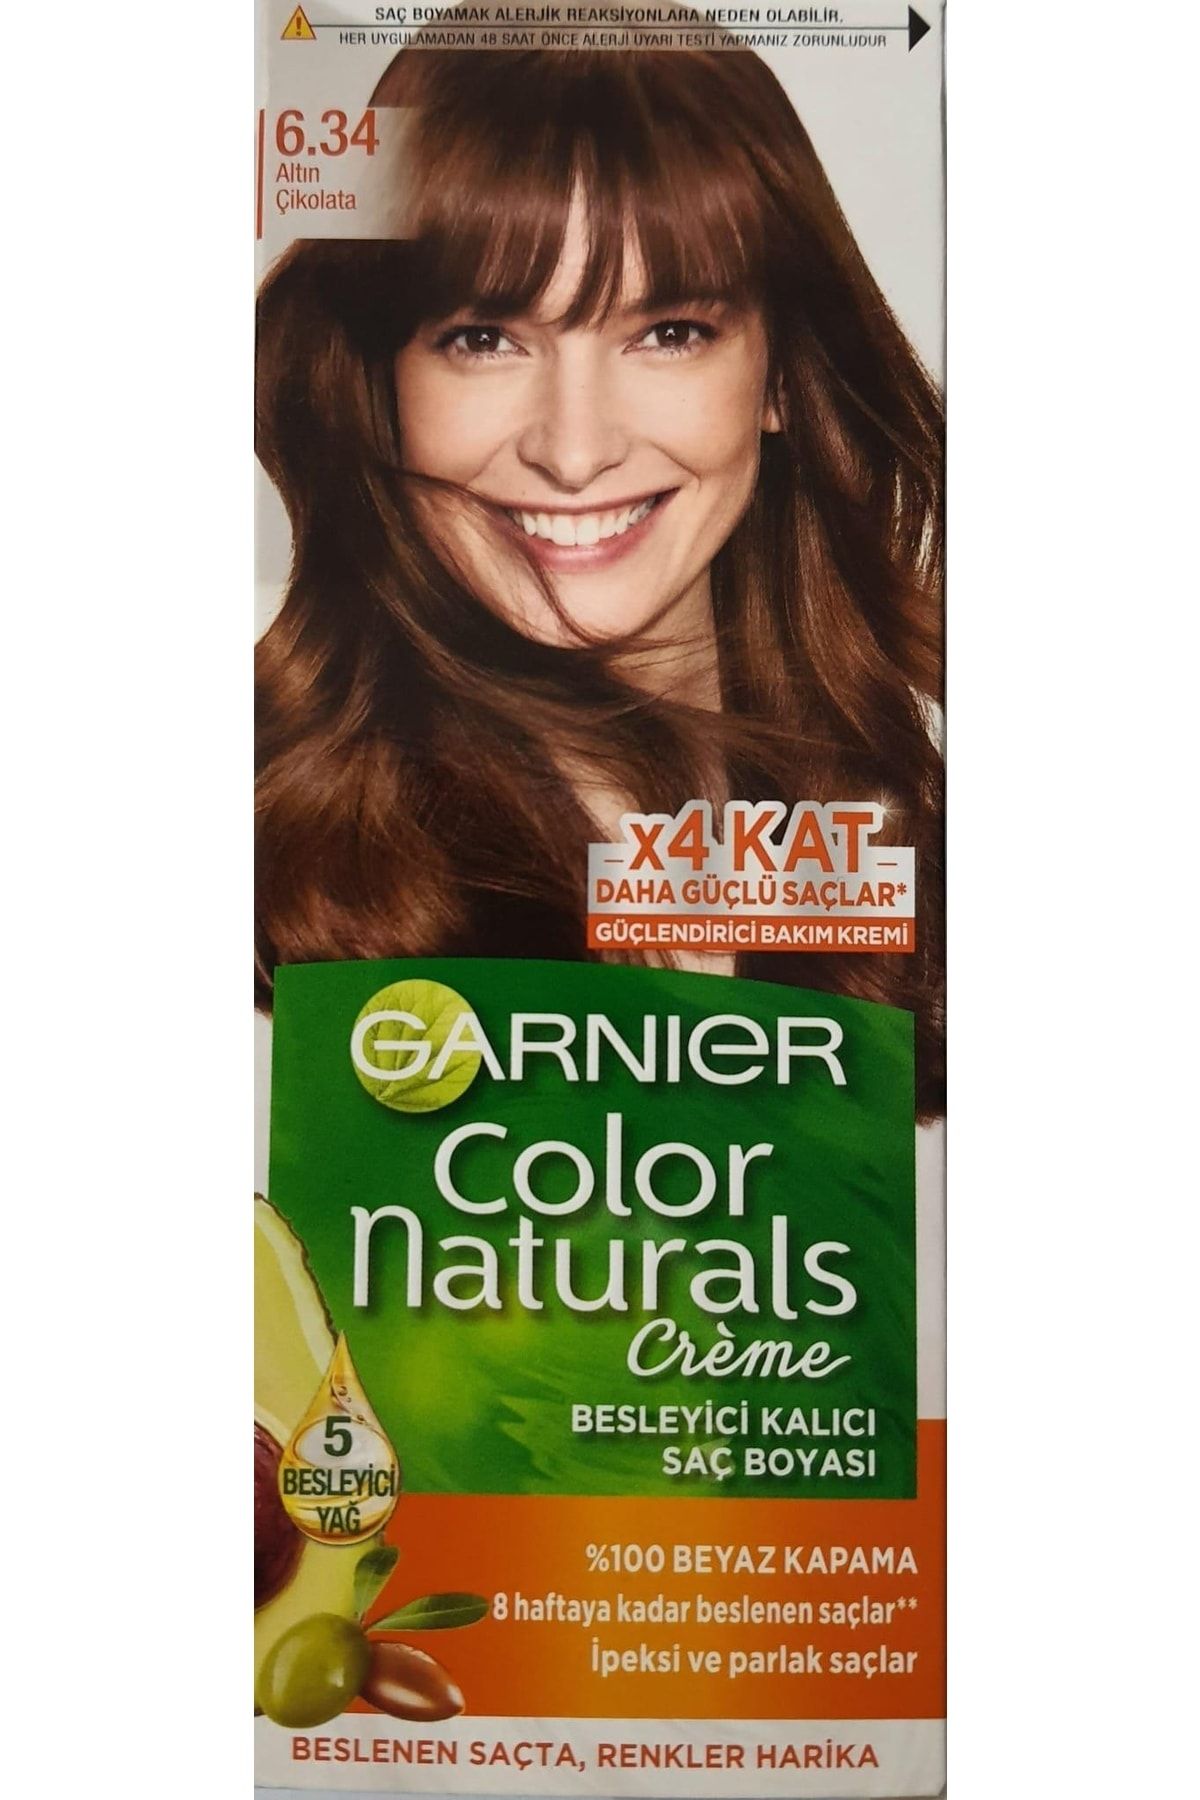 Garnier Color Naturals Saç Boyası 6.34 Altın Çikolata.